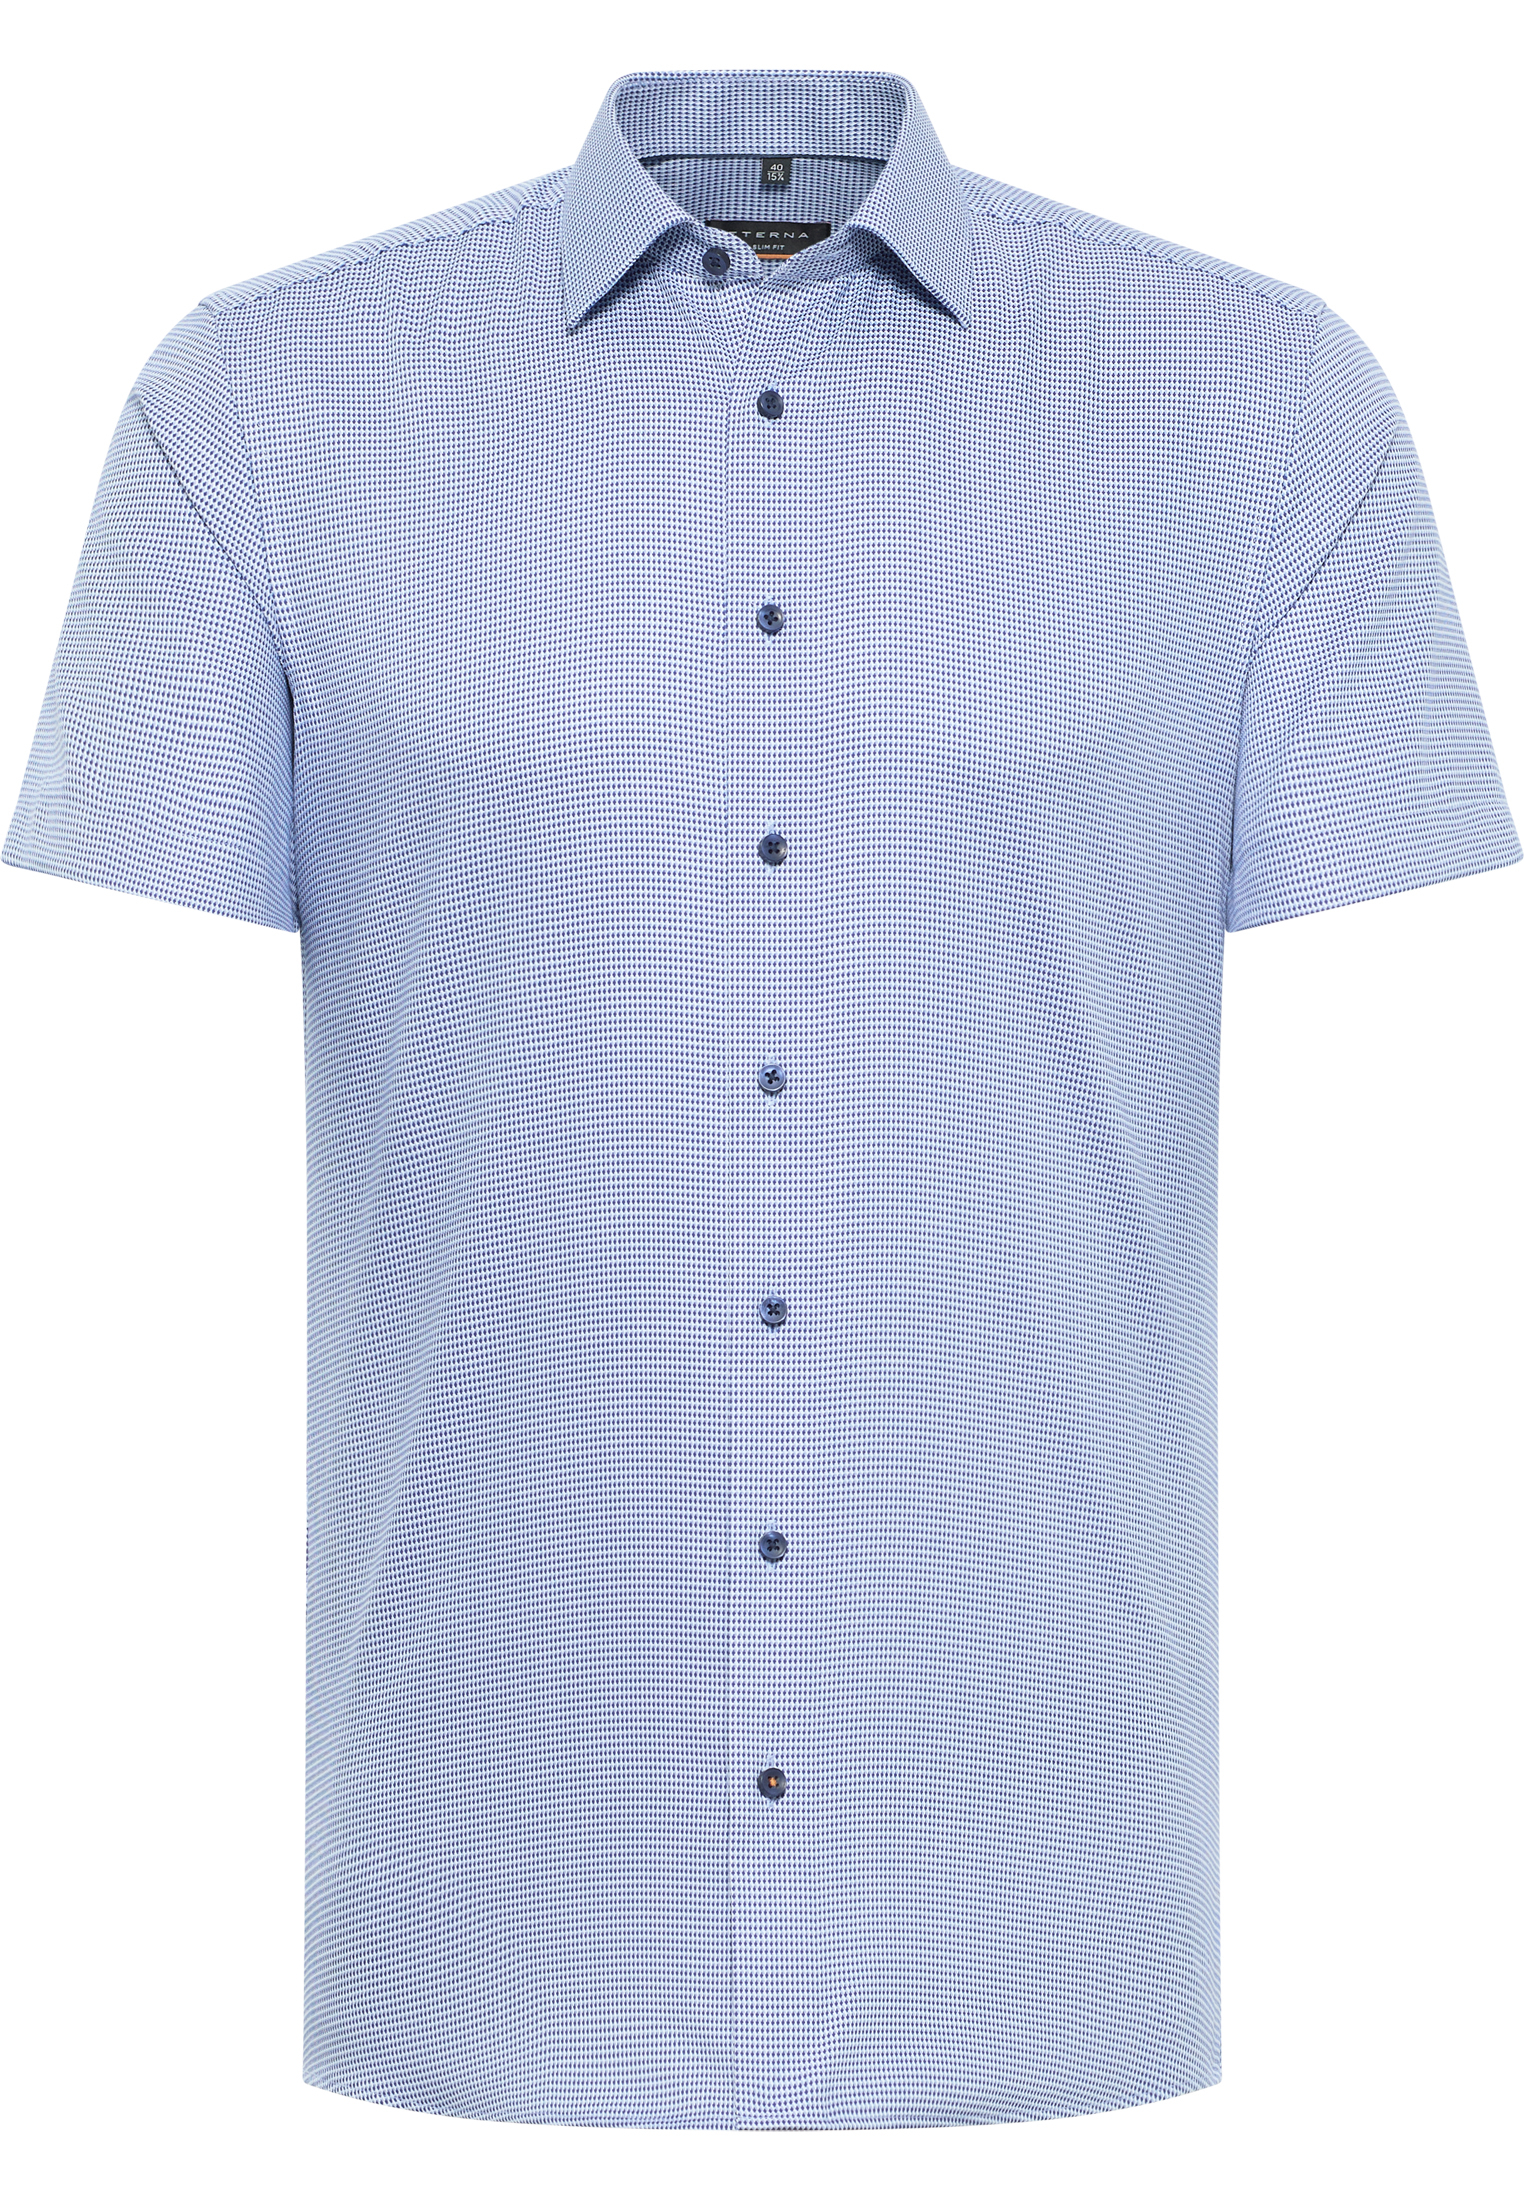 ETERNA textured cotton short-sleeved shirt SLIM FIT